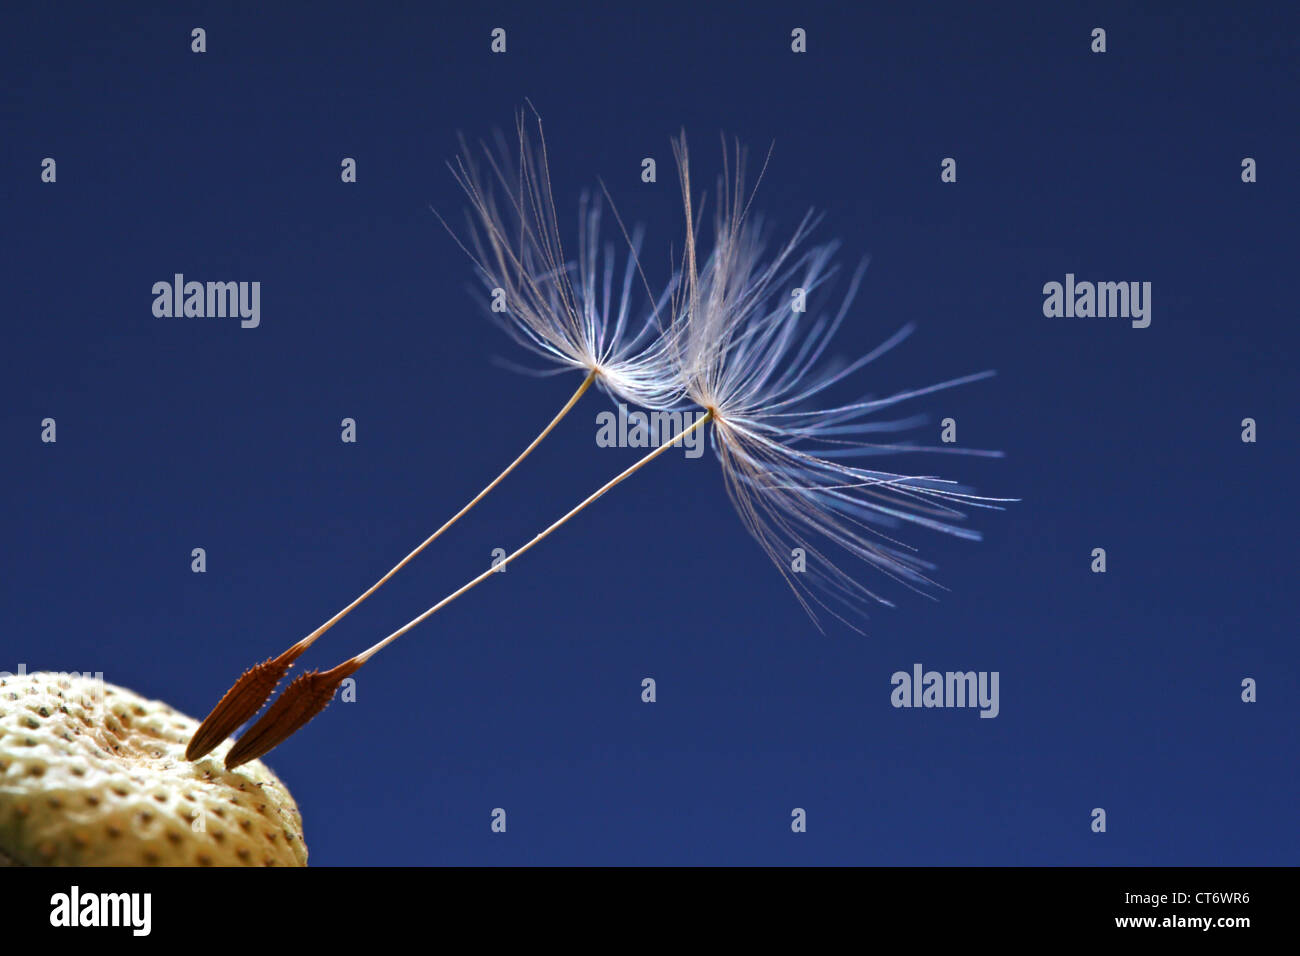 Dandelion seeds (Taraxacum officinale) against a blue background Stock Photo